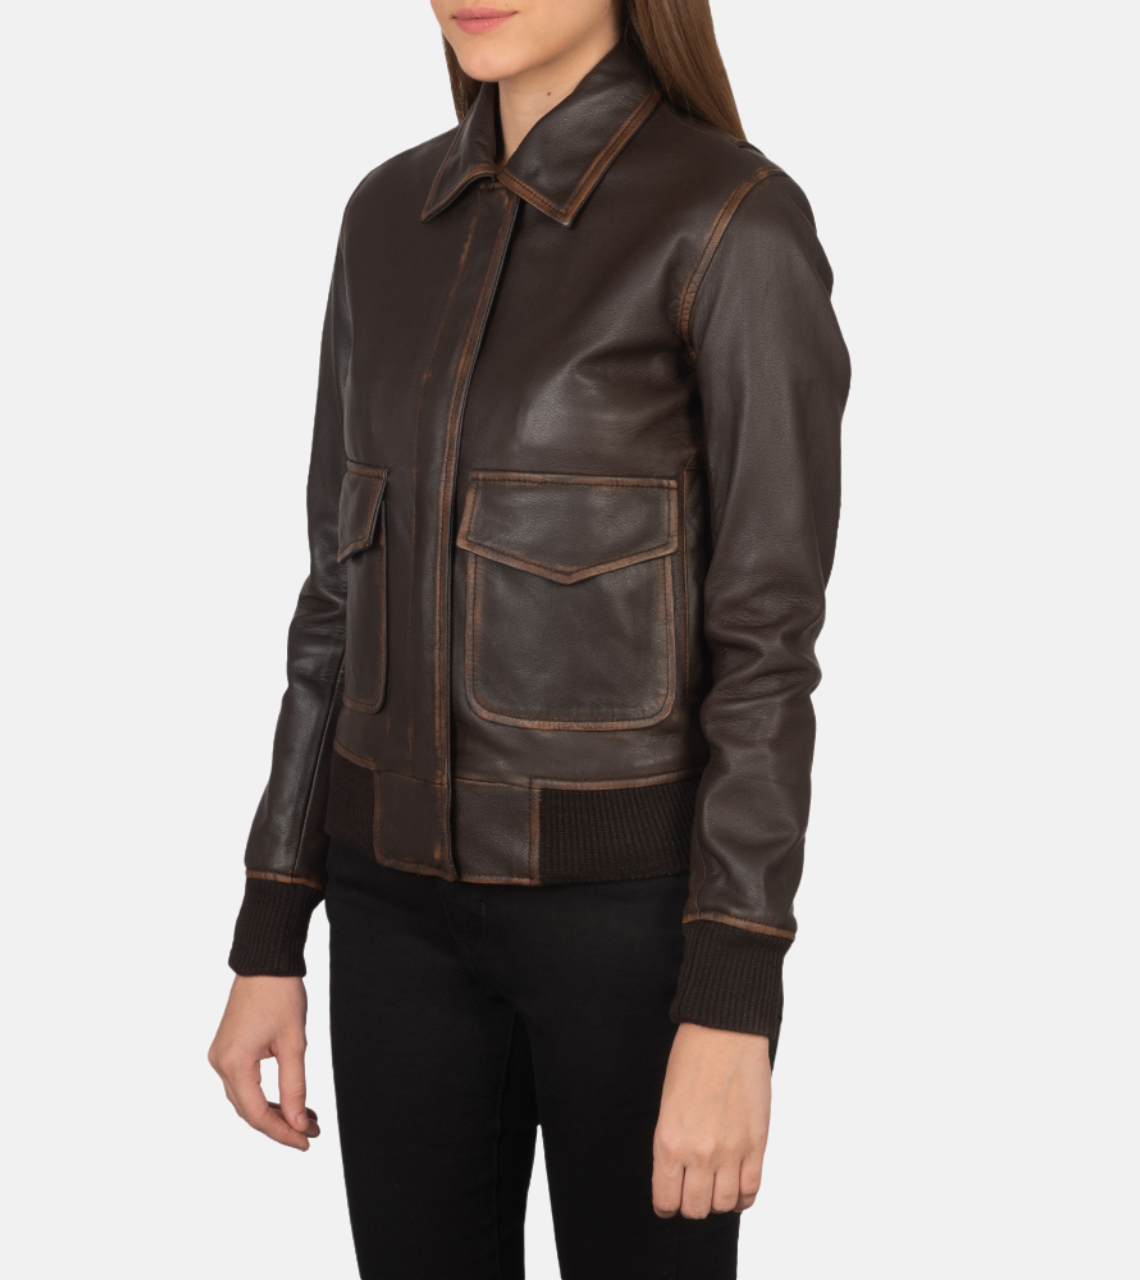 Wasta Women's Leather Jacket